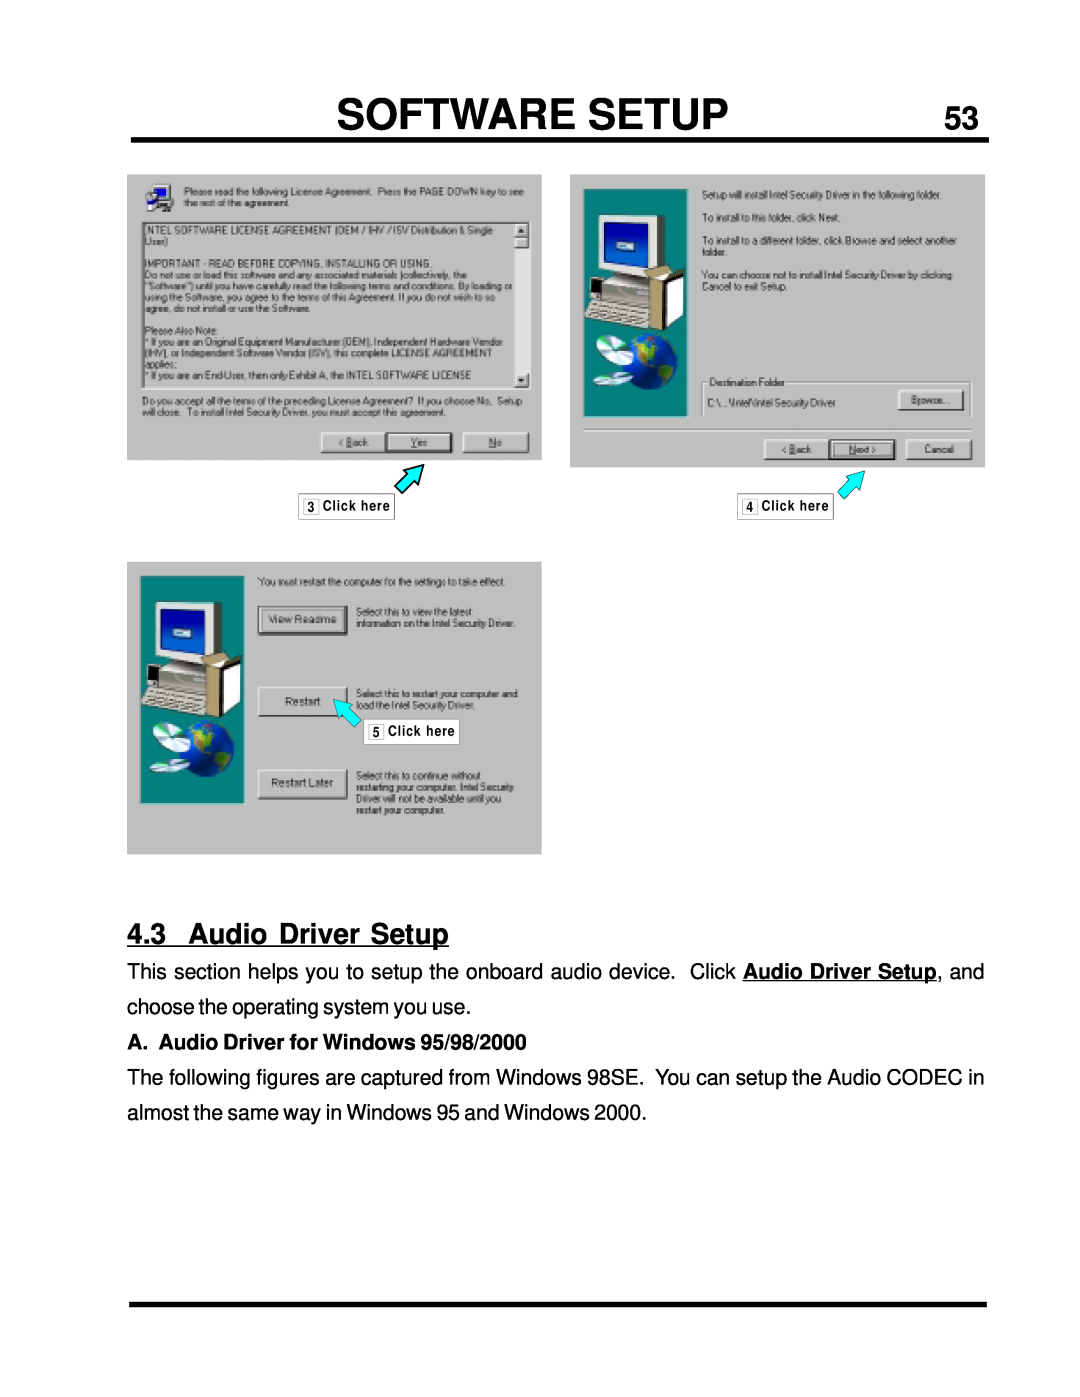 Intel TS-ASP3 user manual Audio Driver Setup, Software Setup, A. Audio Driver for Windows 95/98/2000 